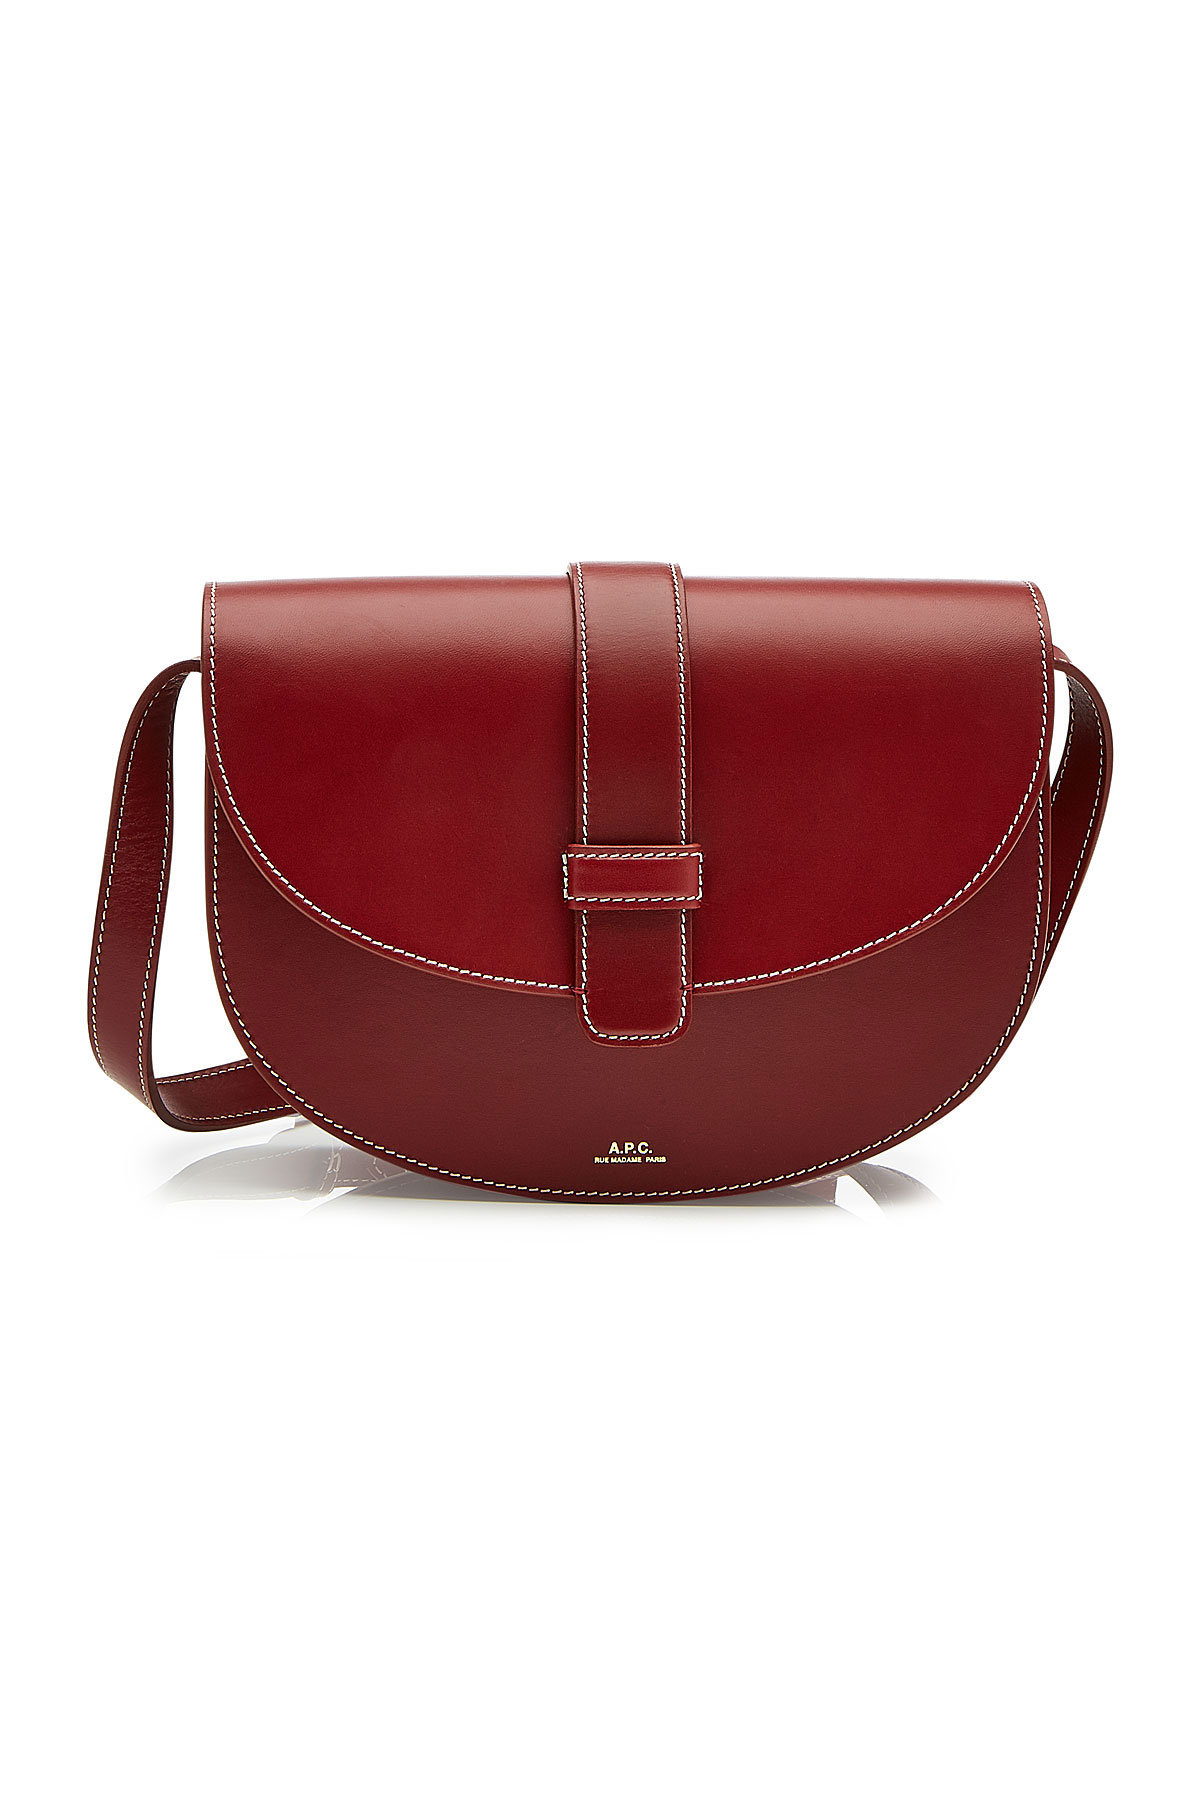 A.P.C. - Eloise Leather Shoulder Bag